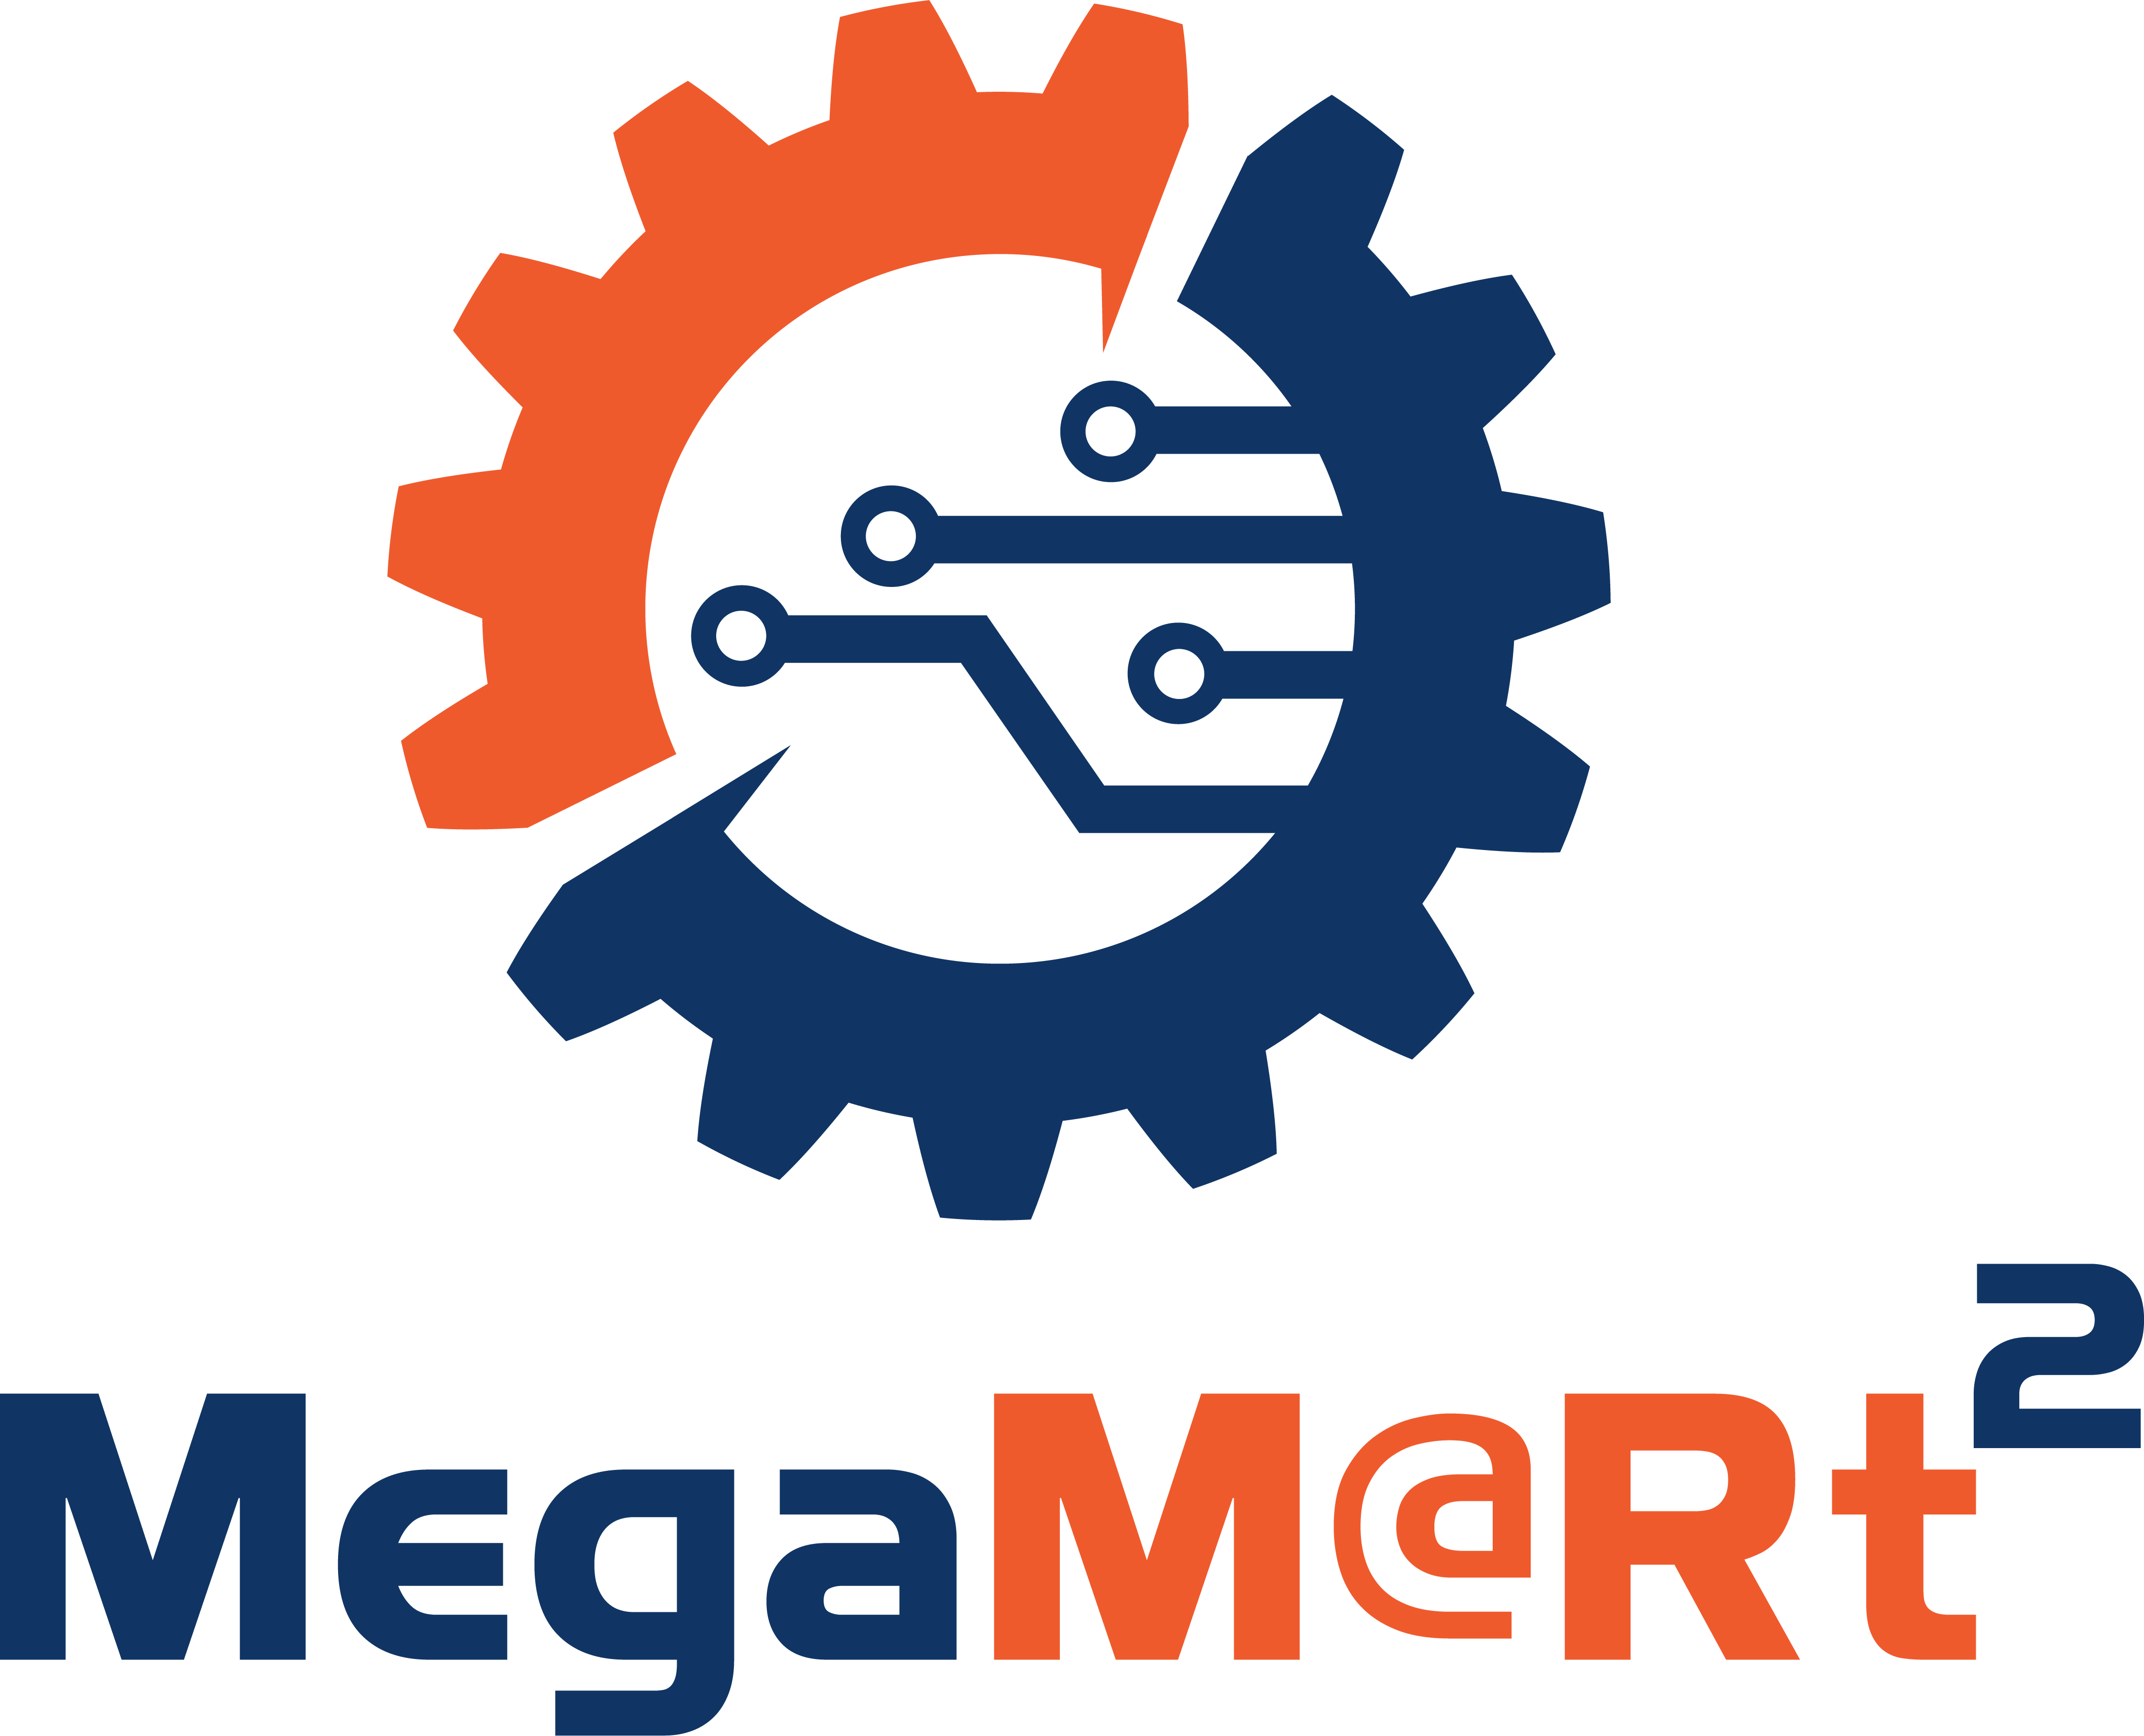 Megamart's logo